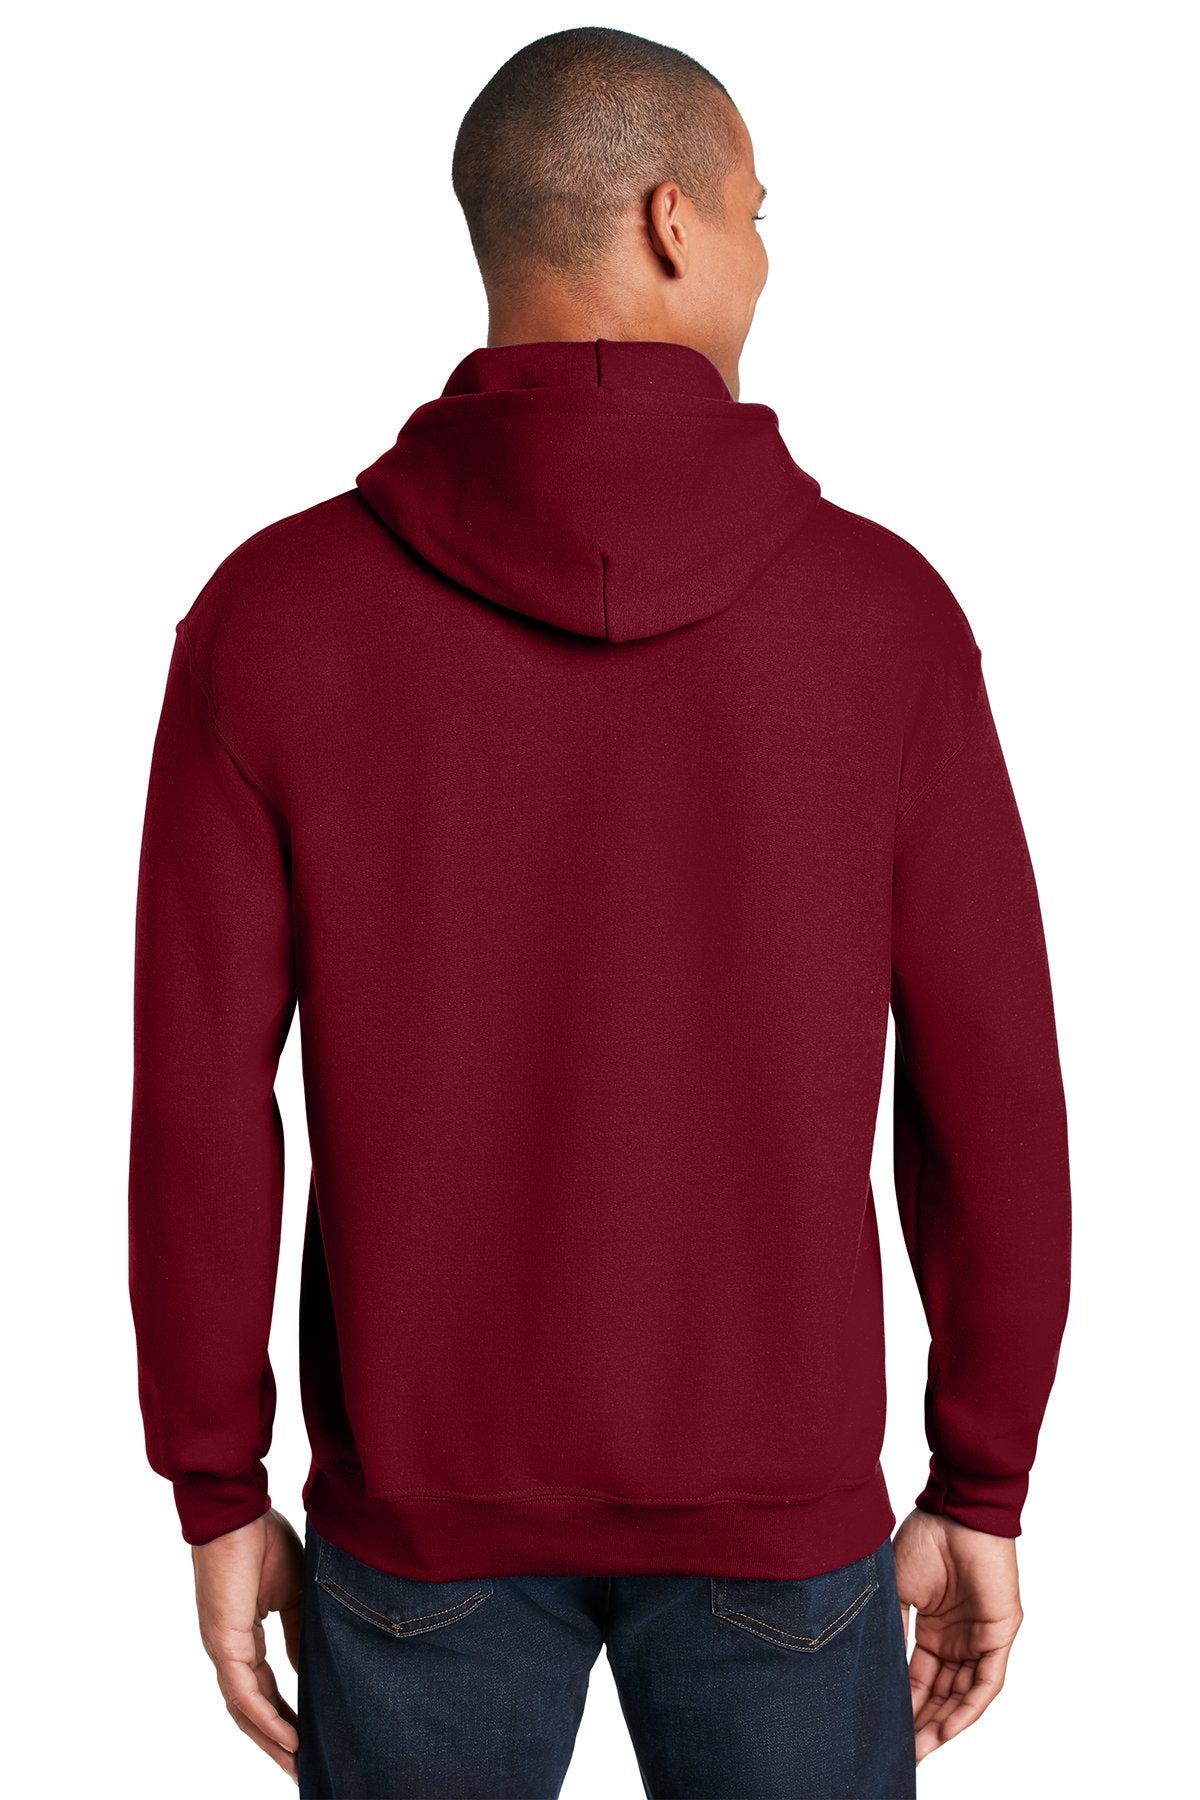 Gildan Heavy Blend Hooded Sweatshirt Cardinal Red